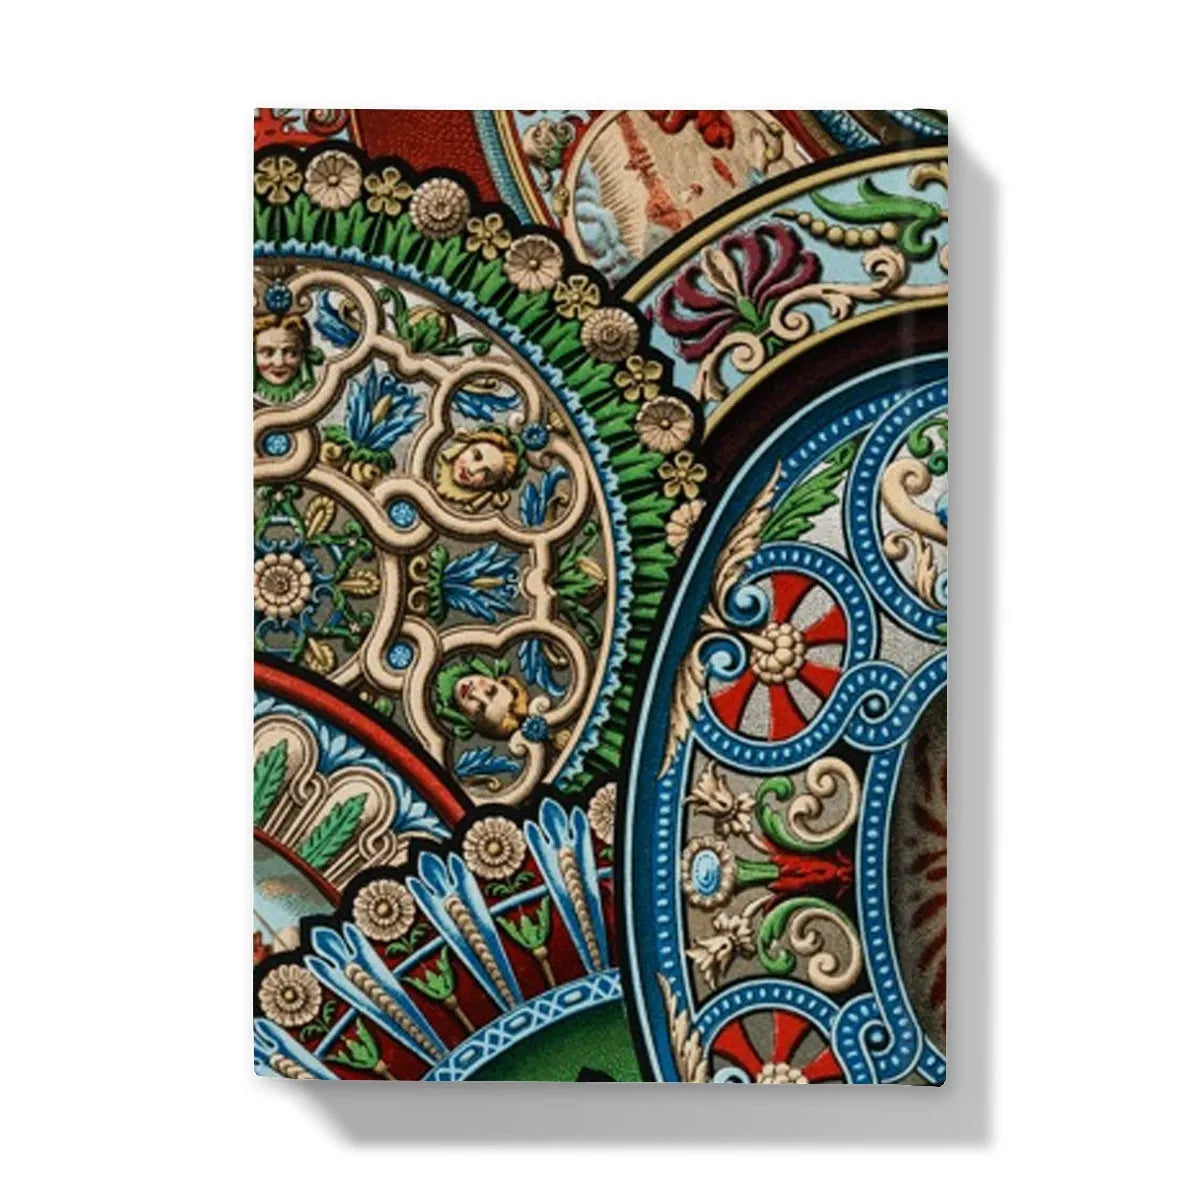 Renaissance Pattern By Auguste Racinet Hardback Journal - Notebooks & Notepads - Aesthetic Art